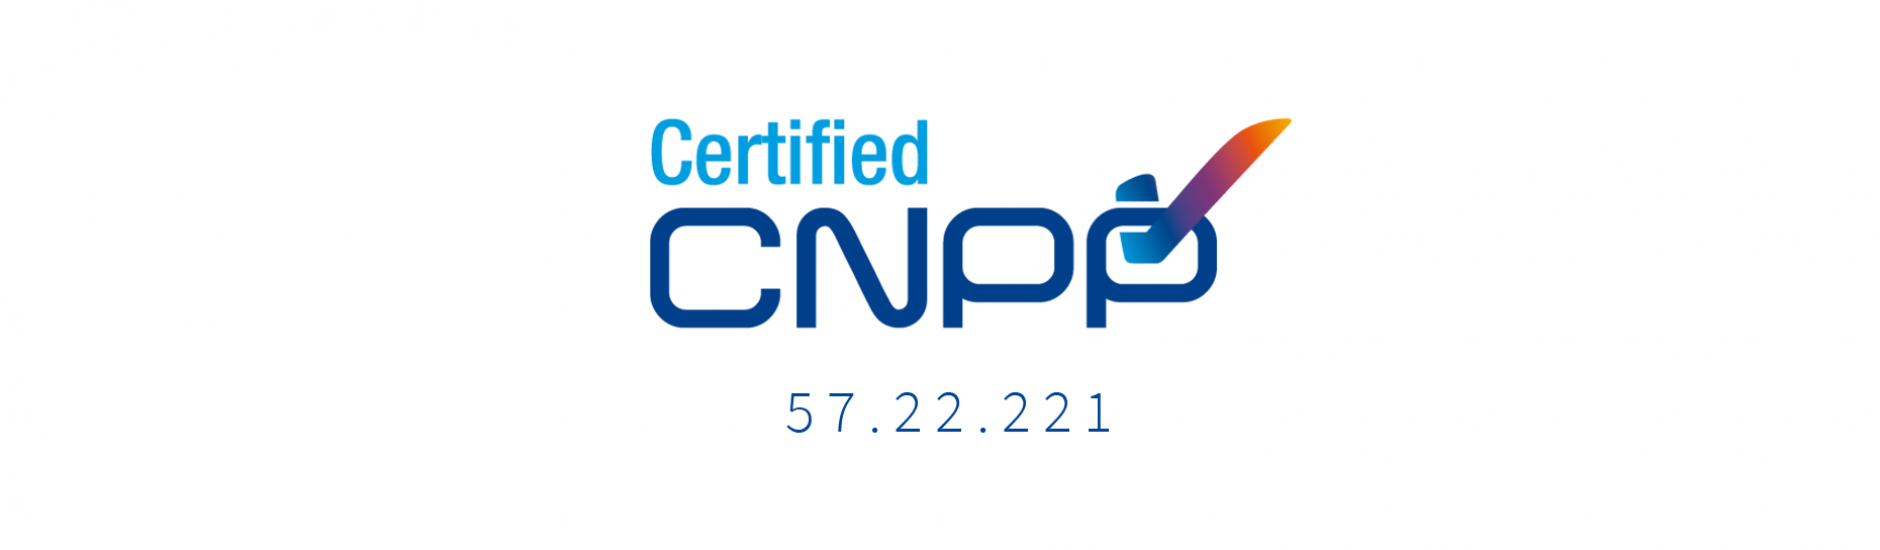 mx-certificate_cnpp-thermal_1860x550